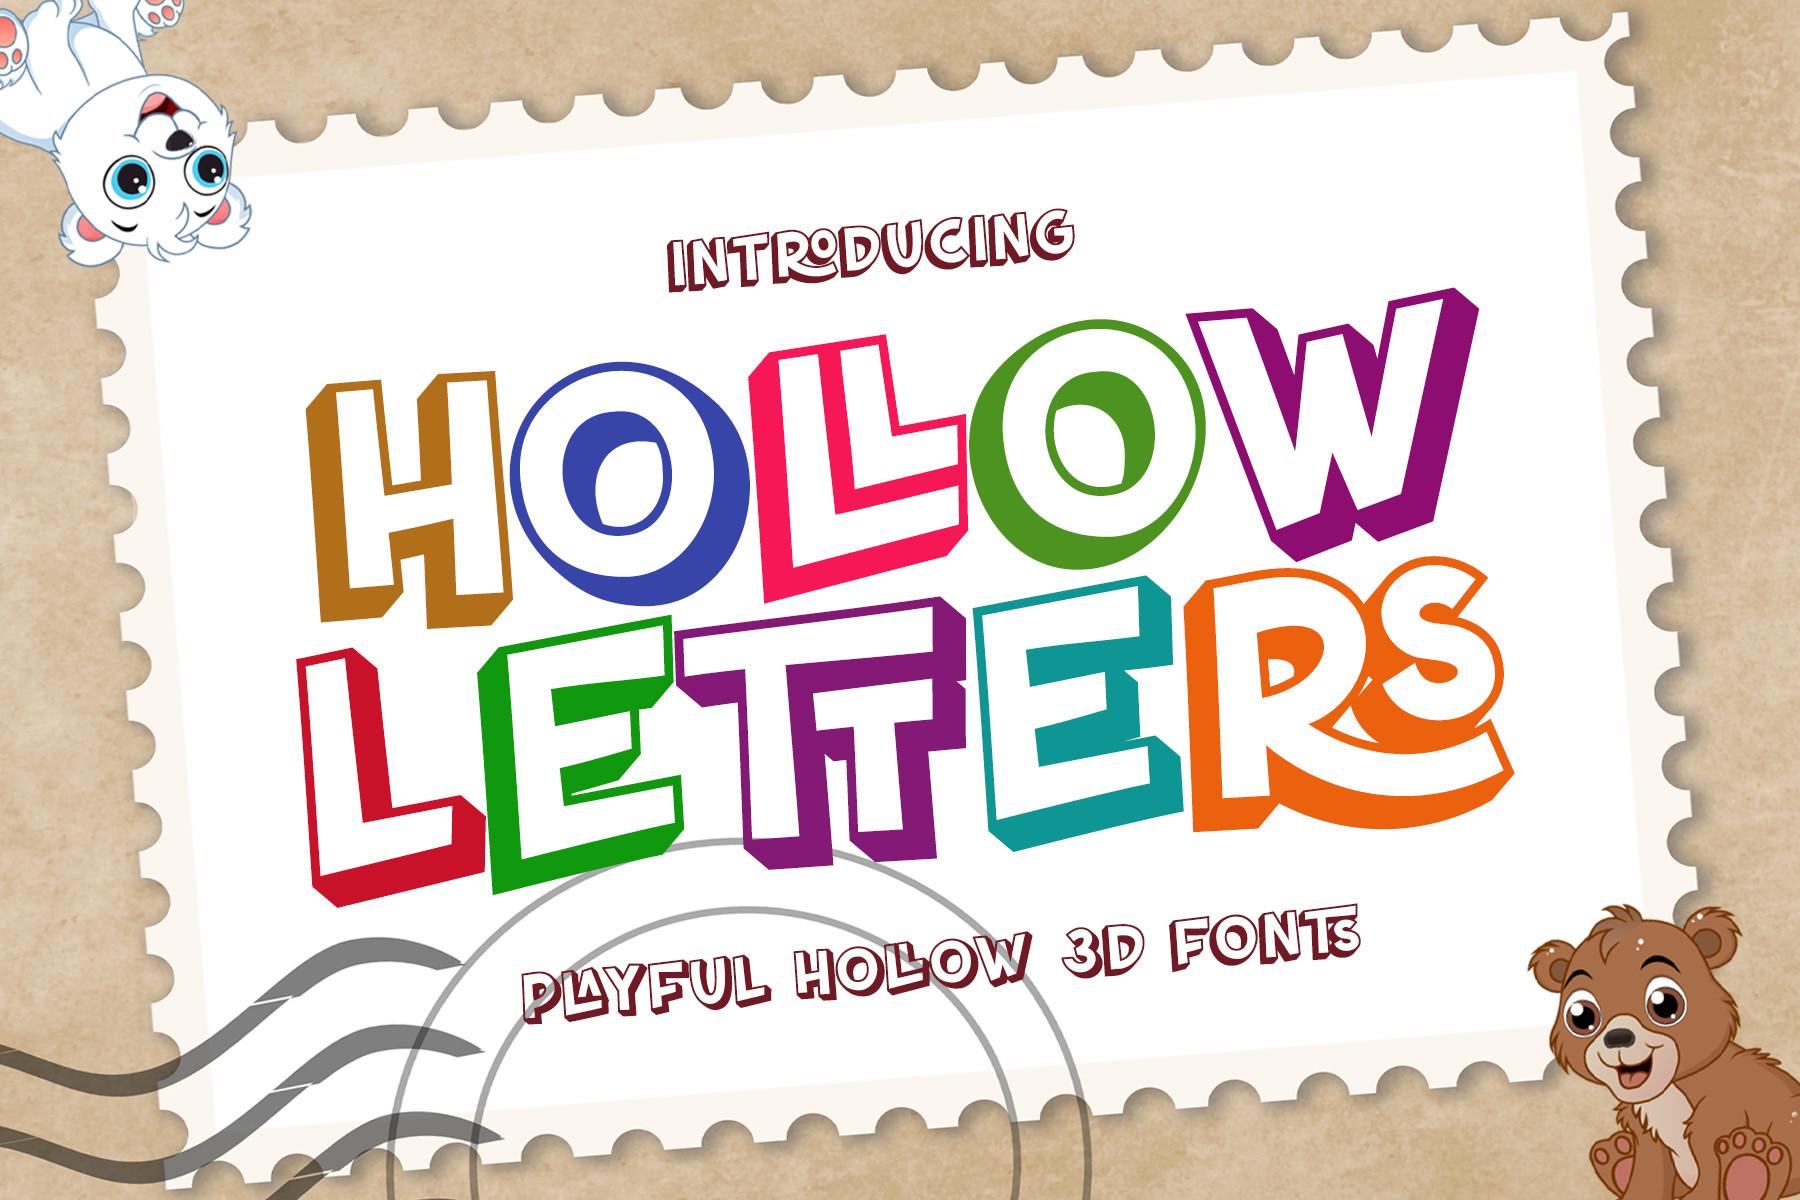 Hollow Letters Font